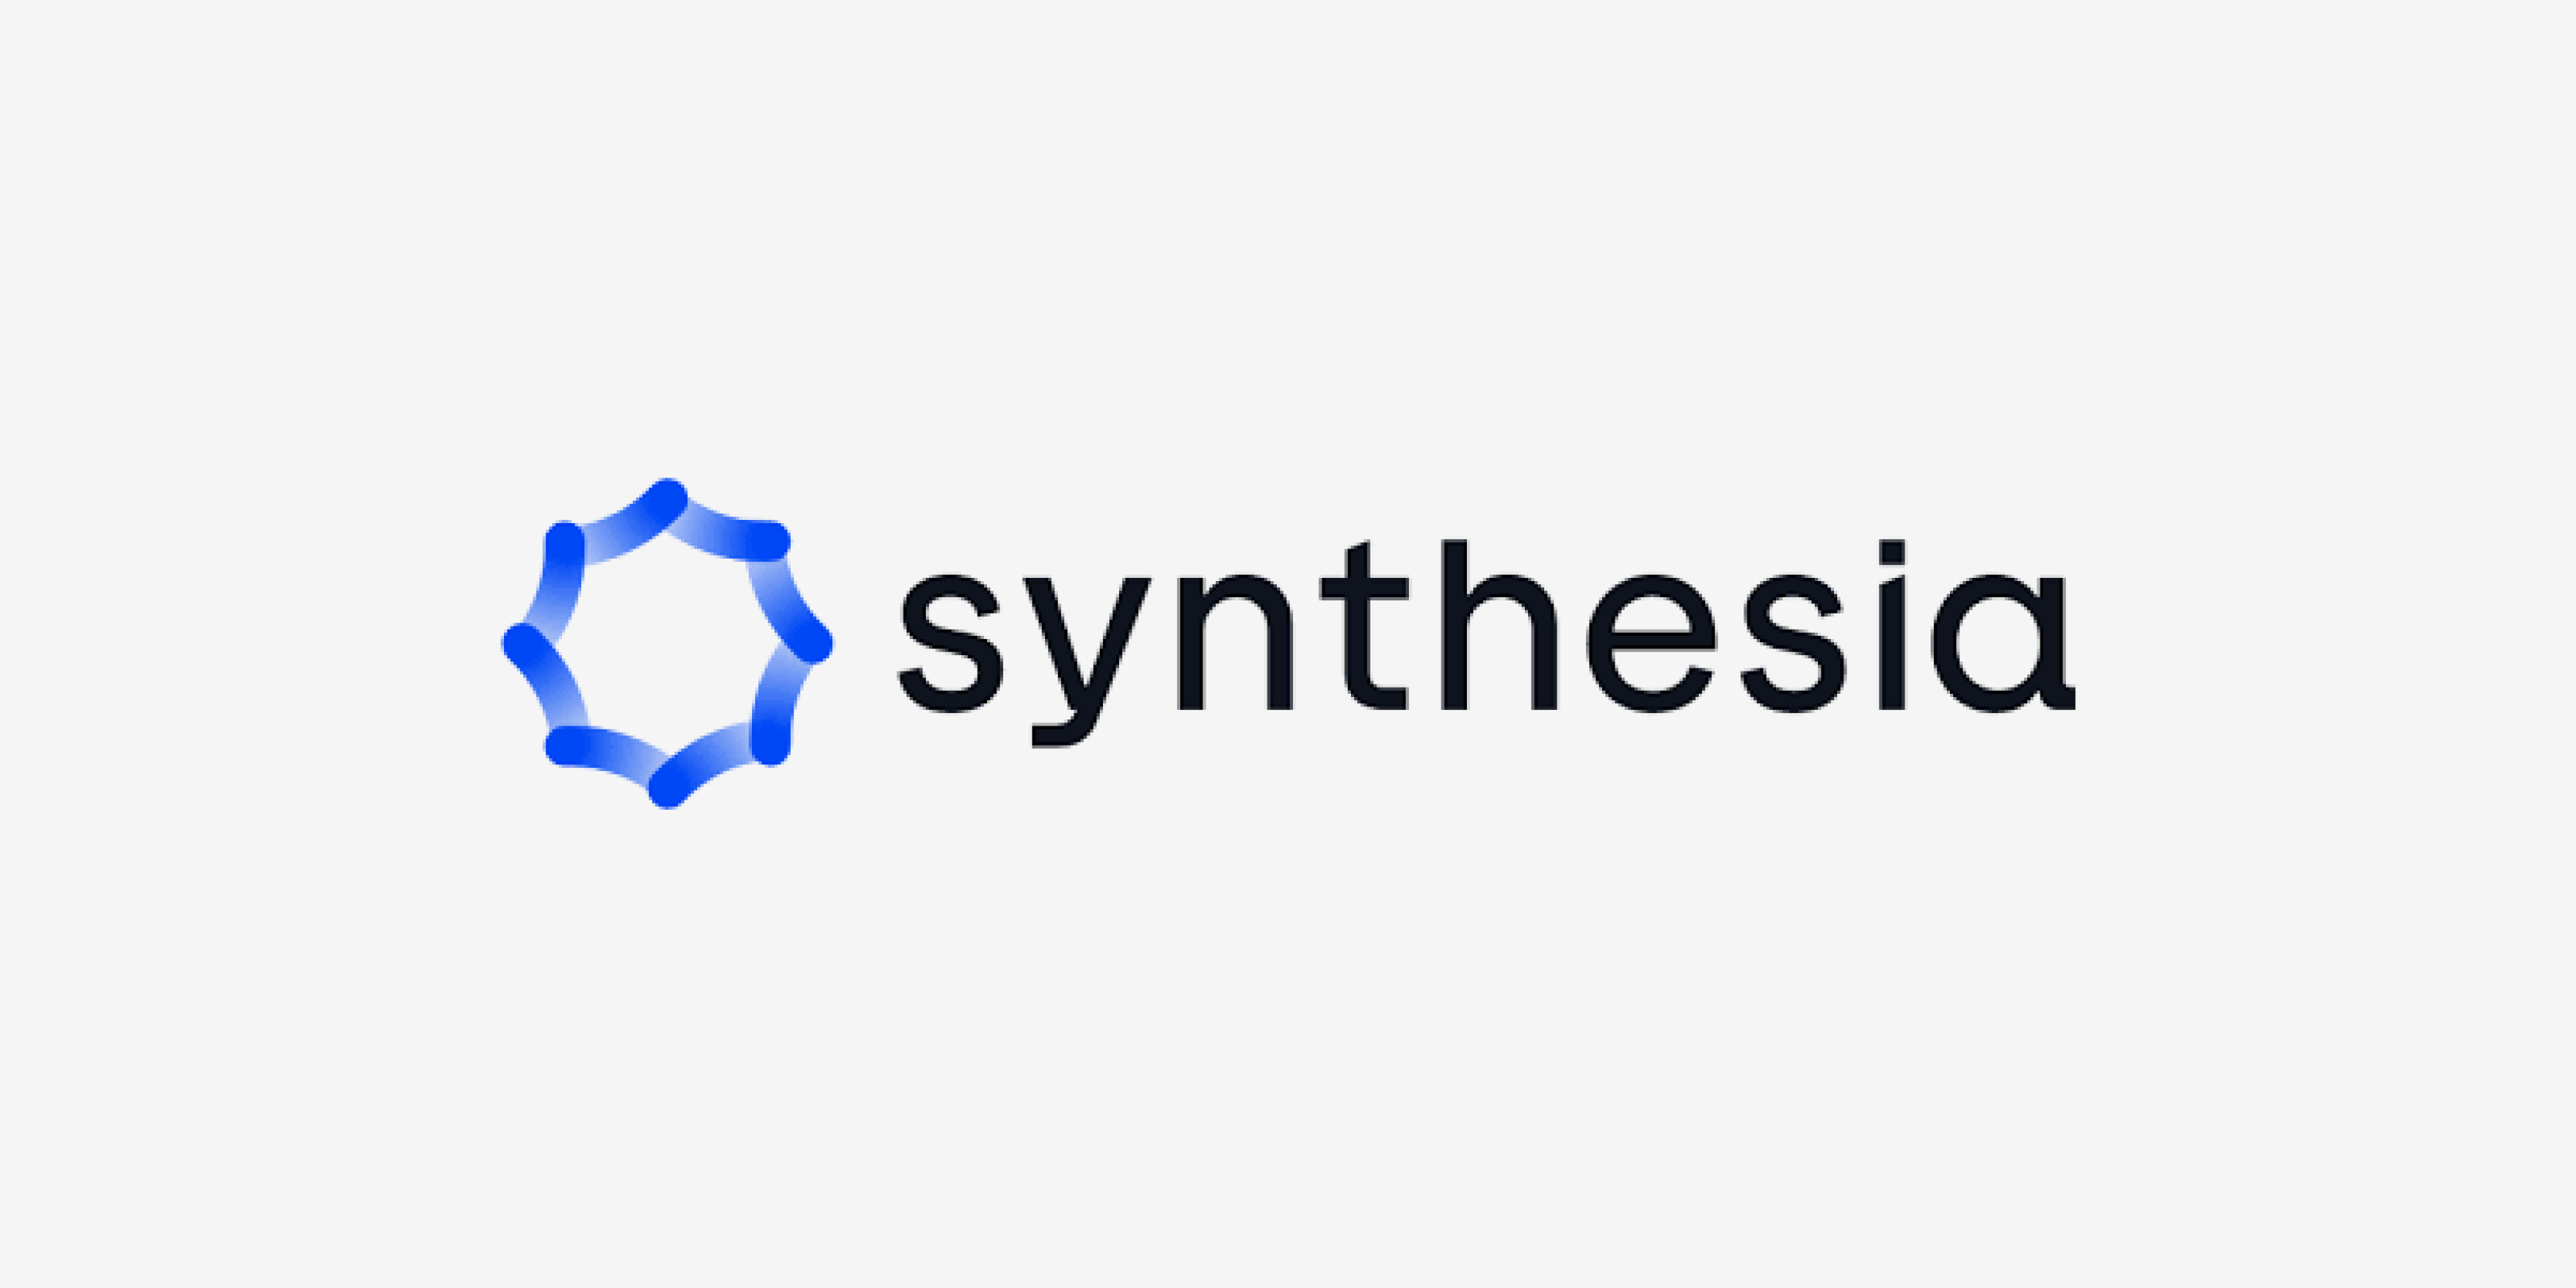 Synthesia raises $50 million to create synthetic videos with AI - Actu IA